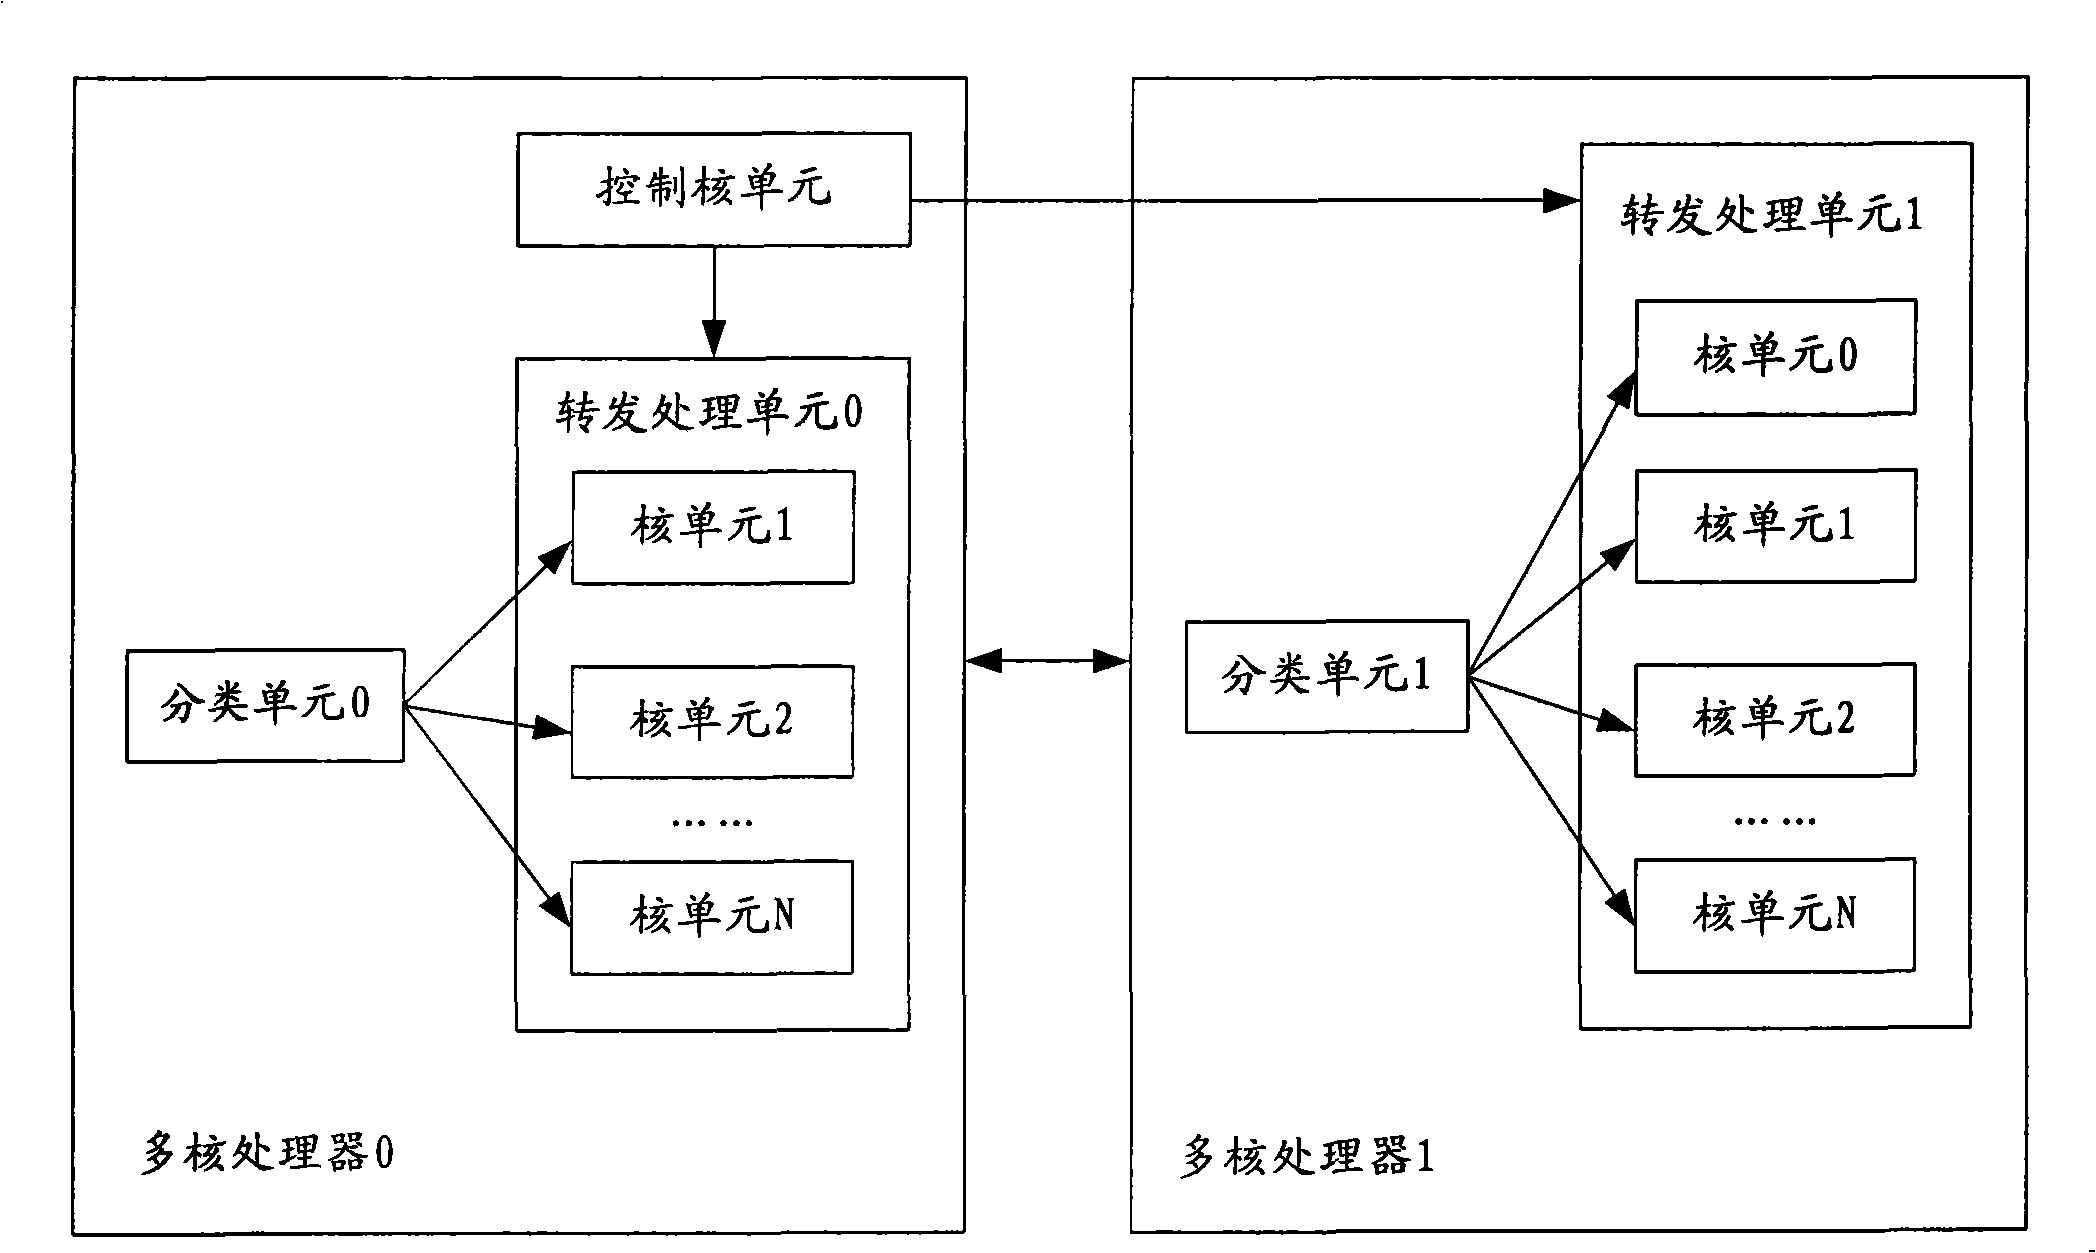 Network equipment and packet forwarding method